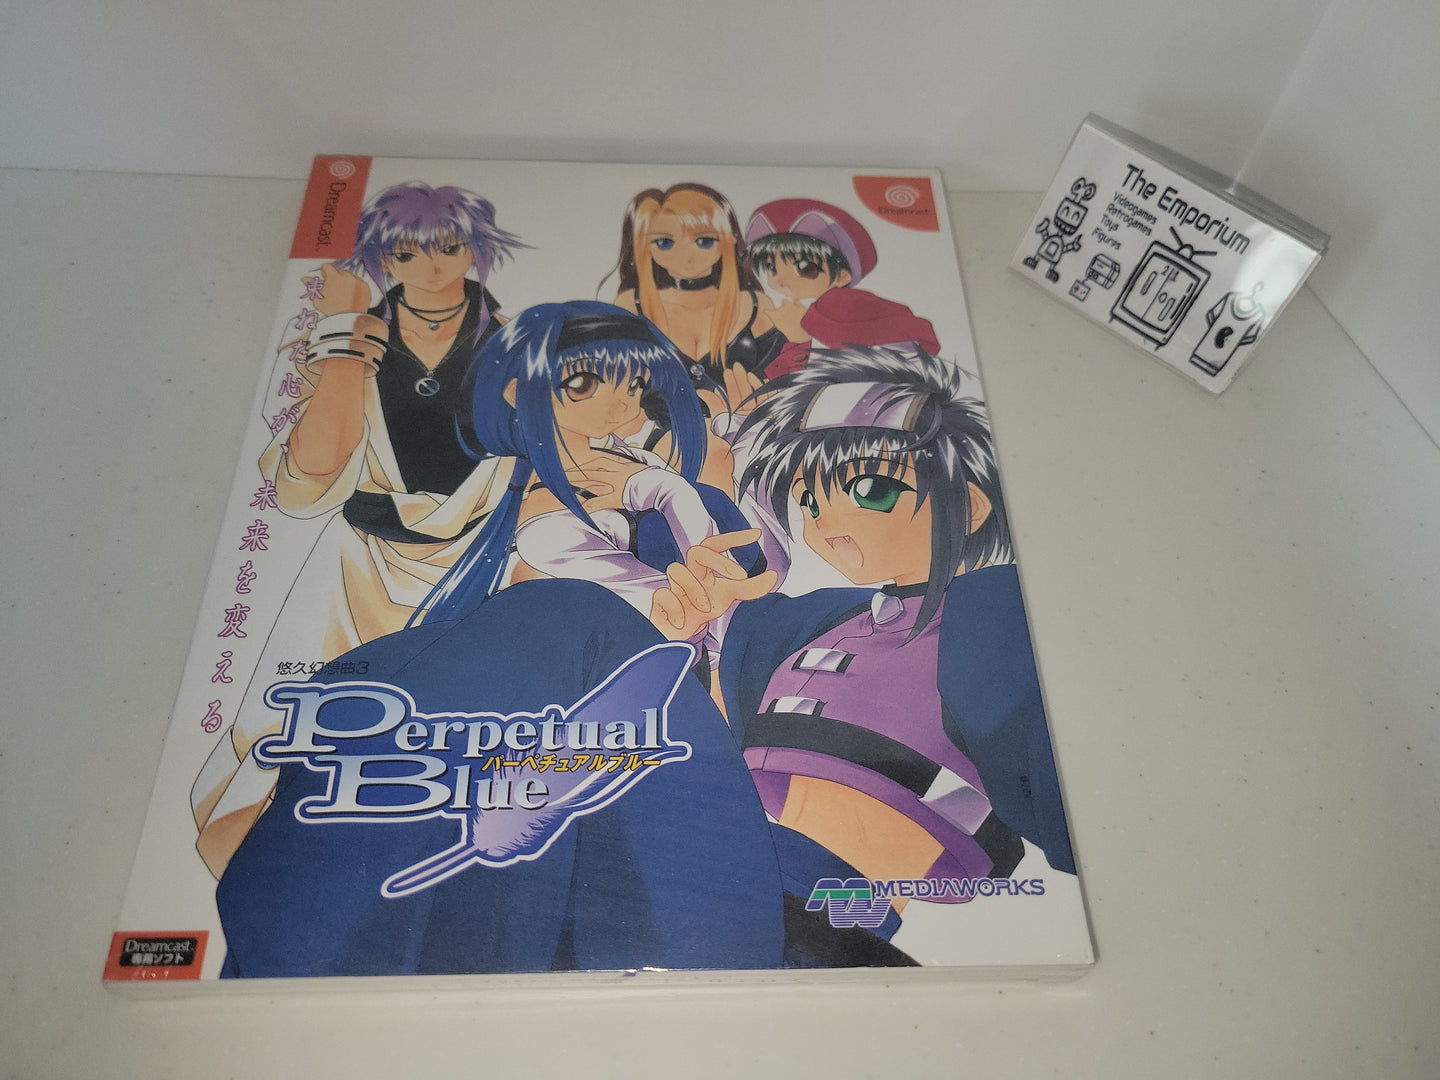 YUKYU GENSO KYOKU 3 Perpetual Blue - Sega dc Dreamcast